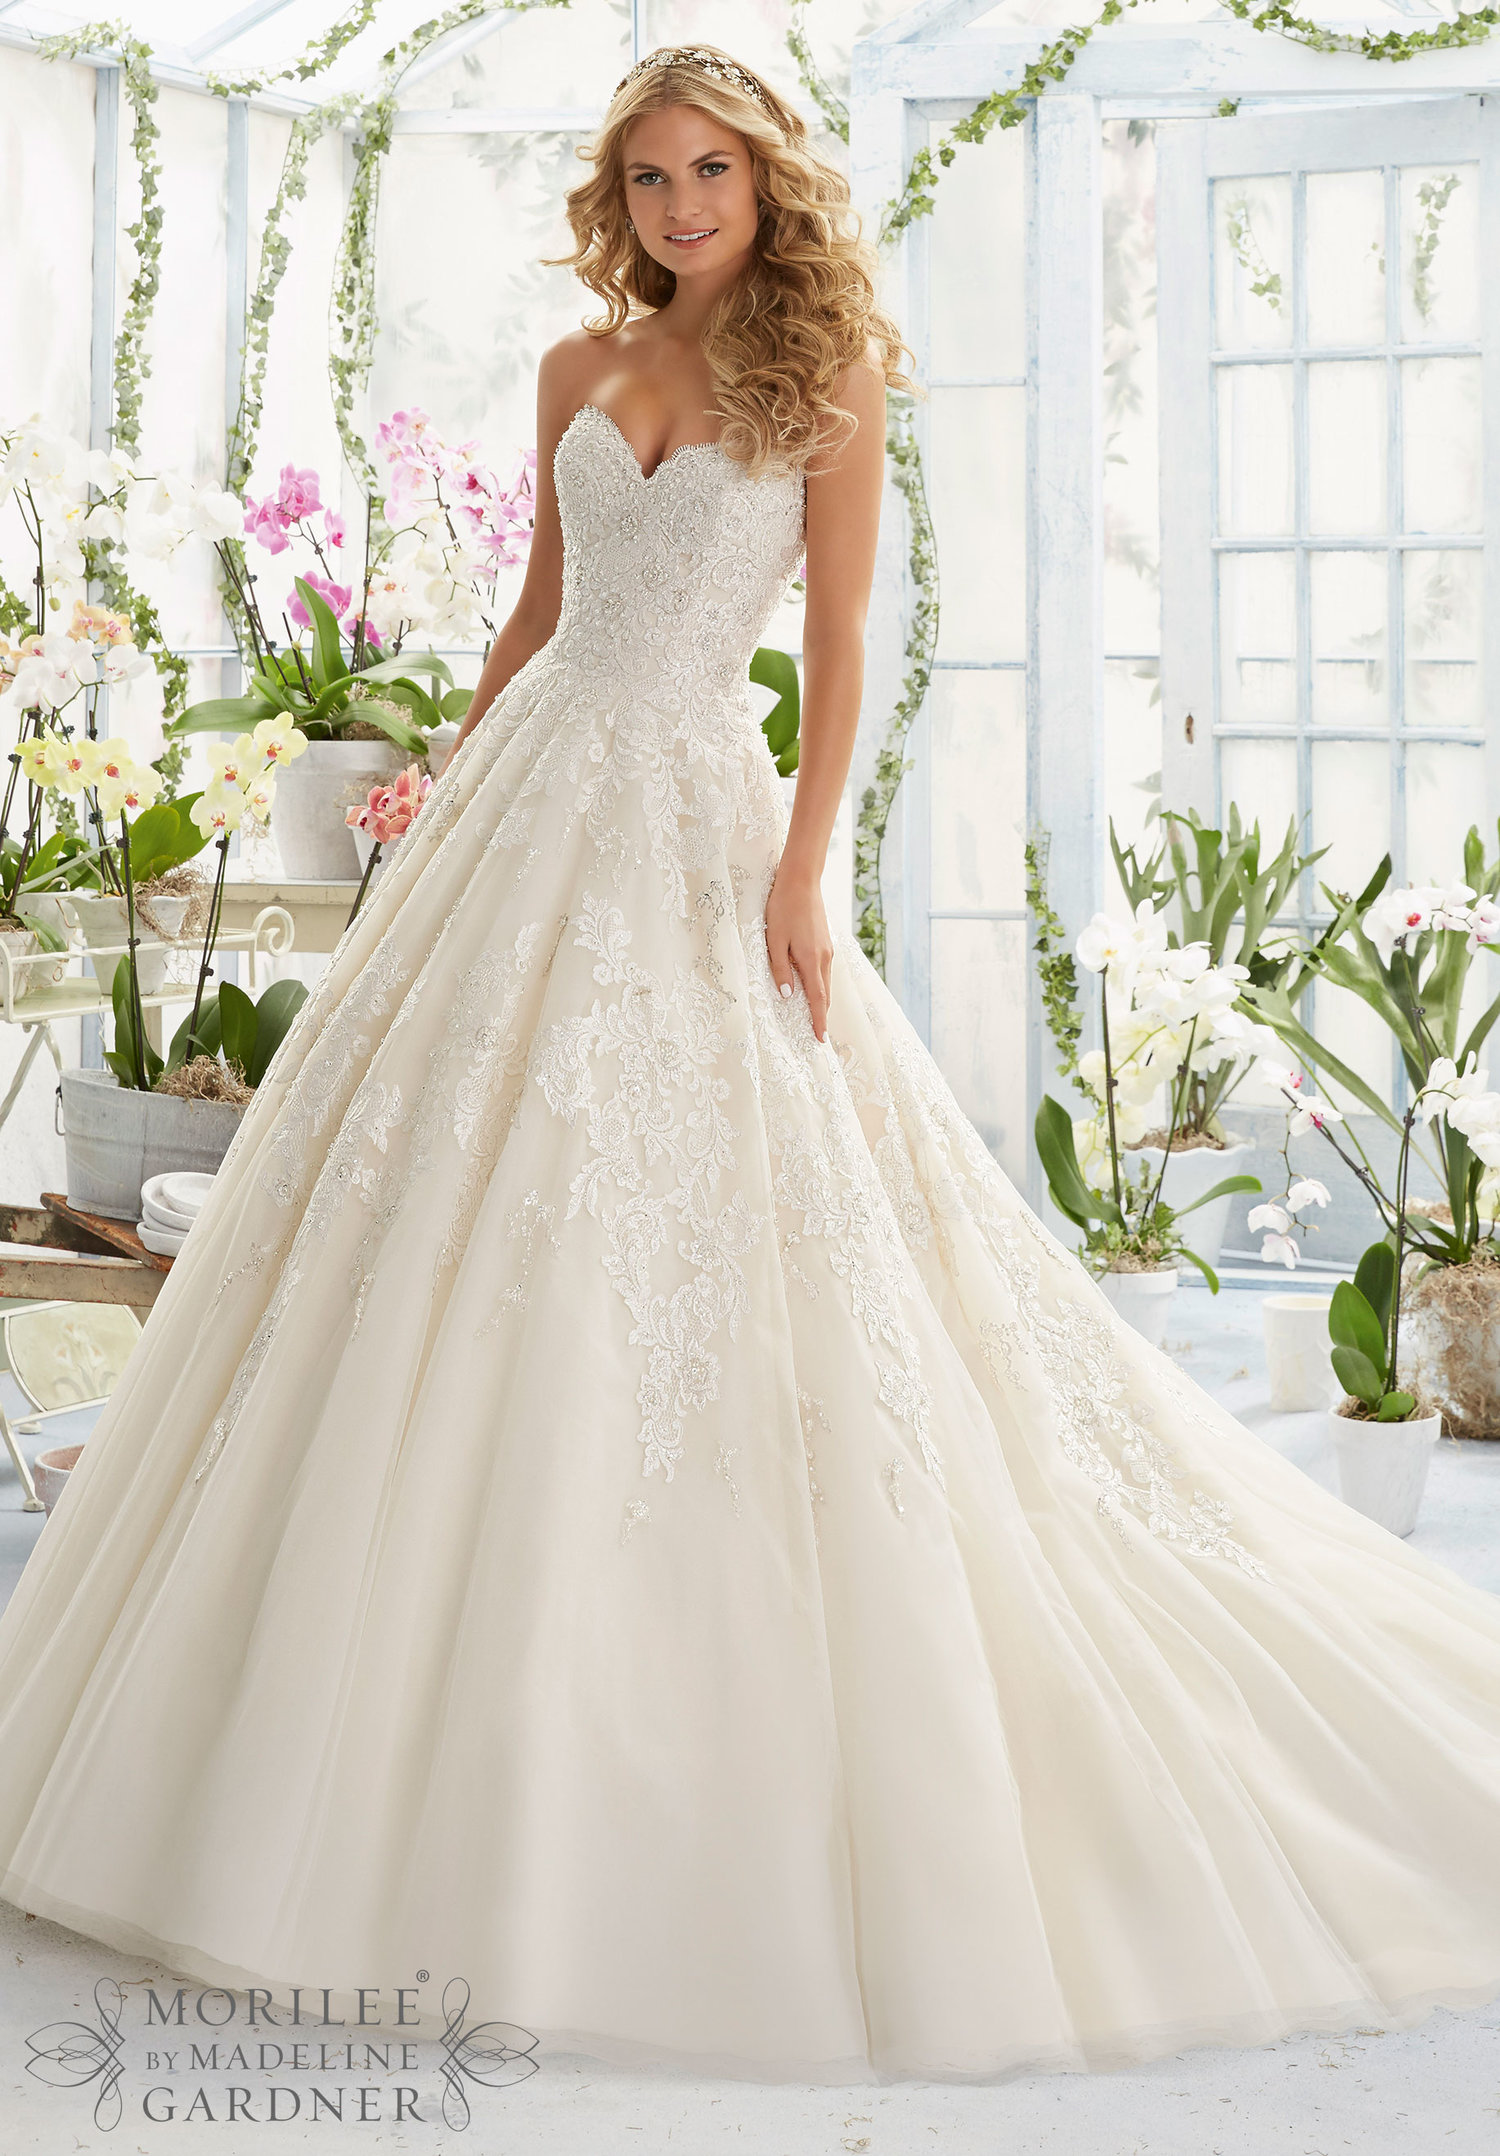 Wedding Dresses & Bridal Shop near Greenville, SC | Carolina Bride ...